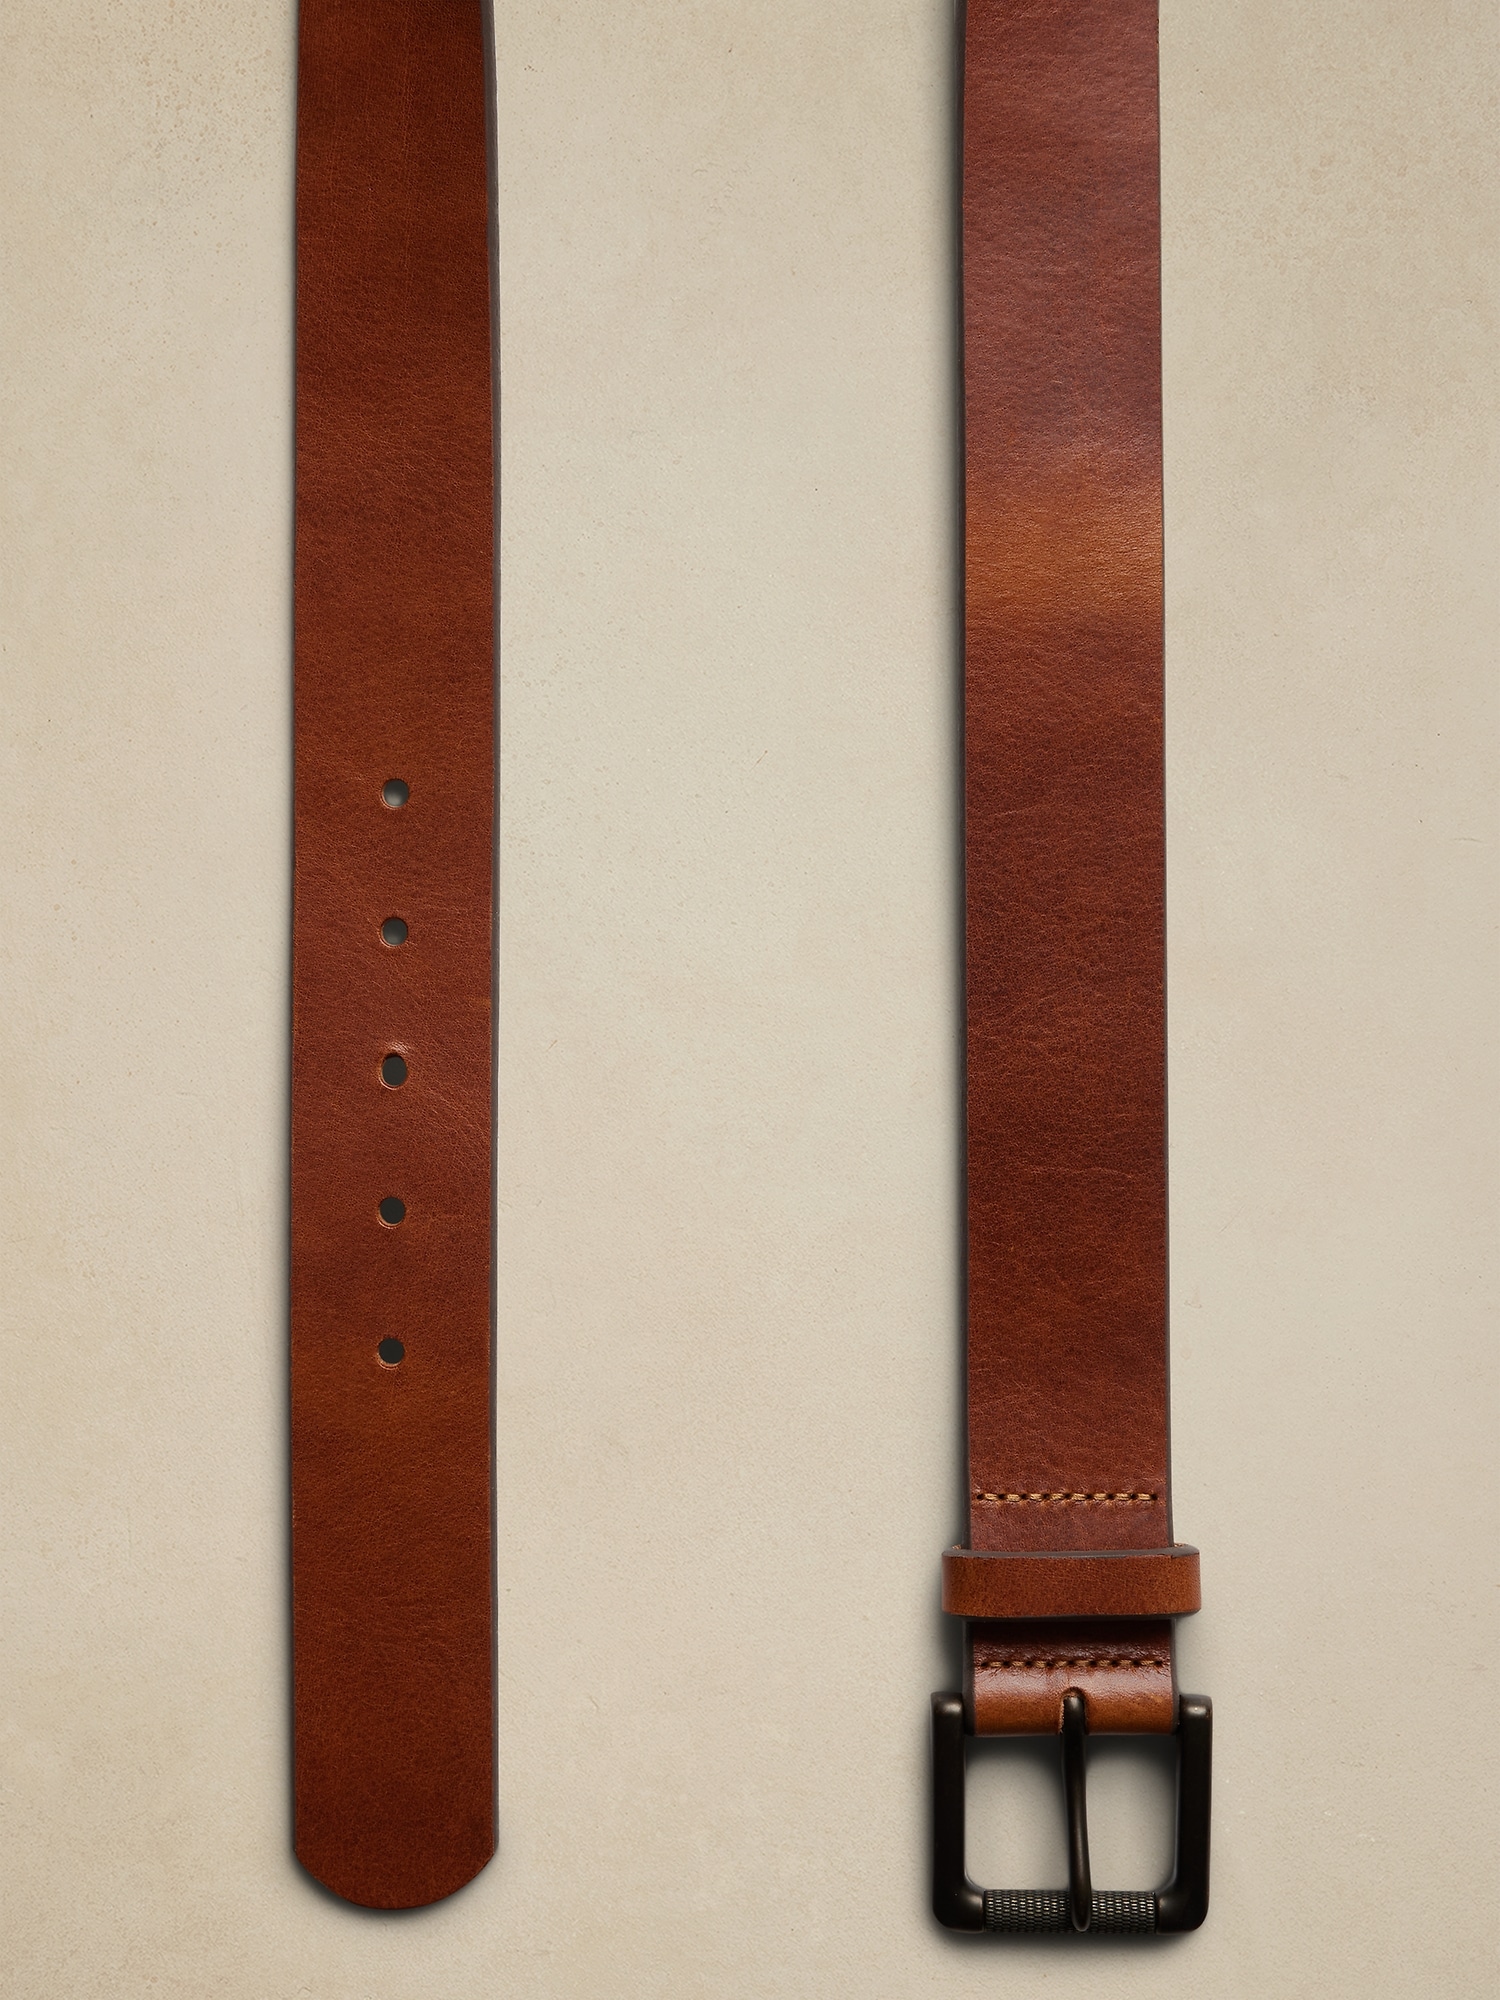 Tumbled Leather Belt